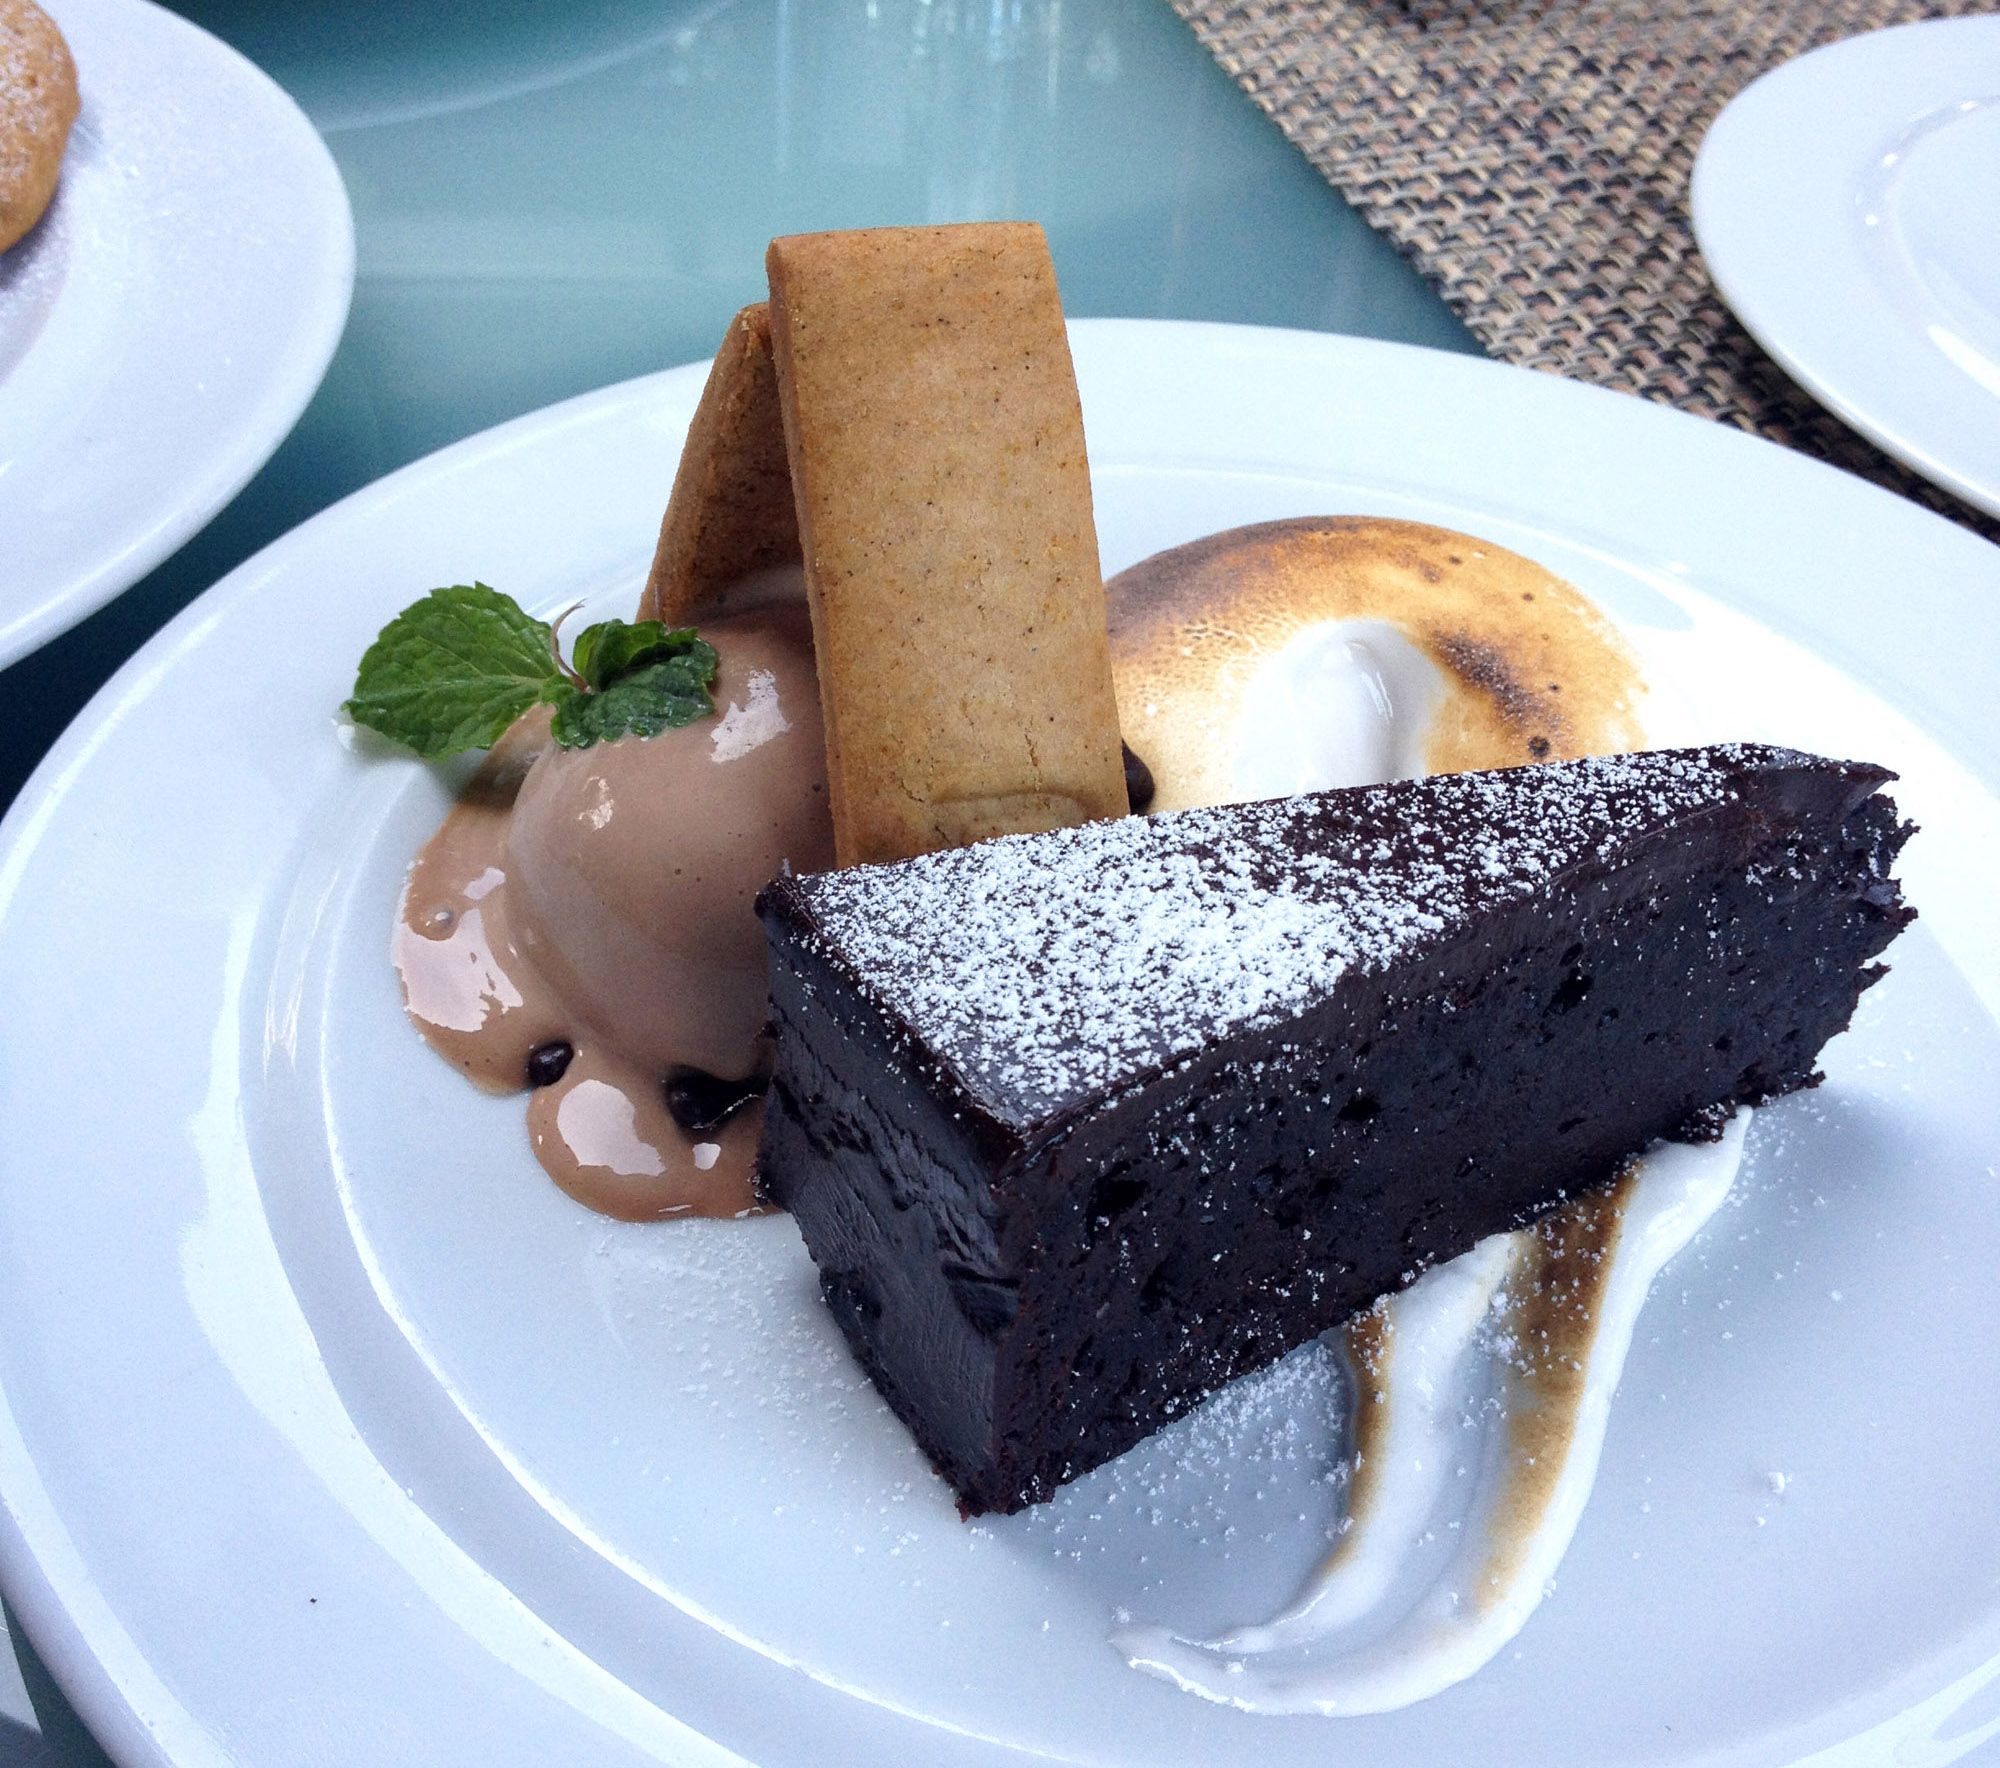 BOA Steakhouse, dessert, chocolate cake